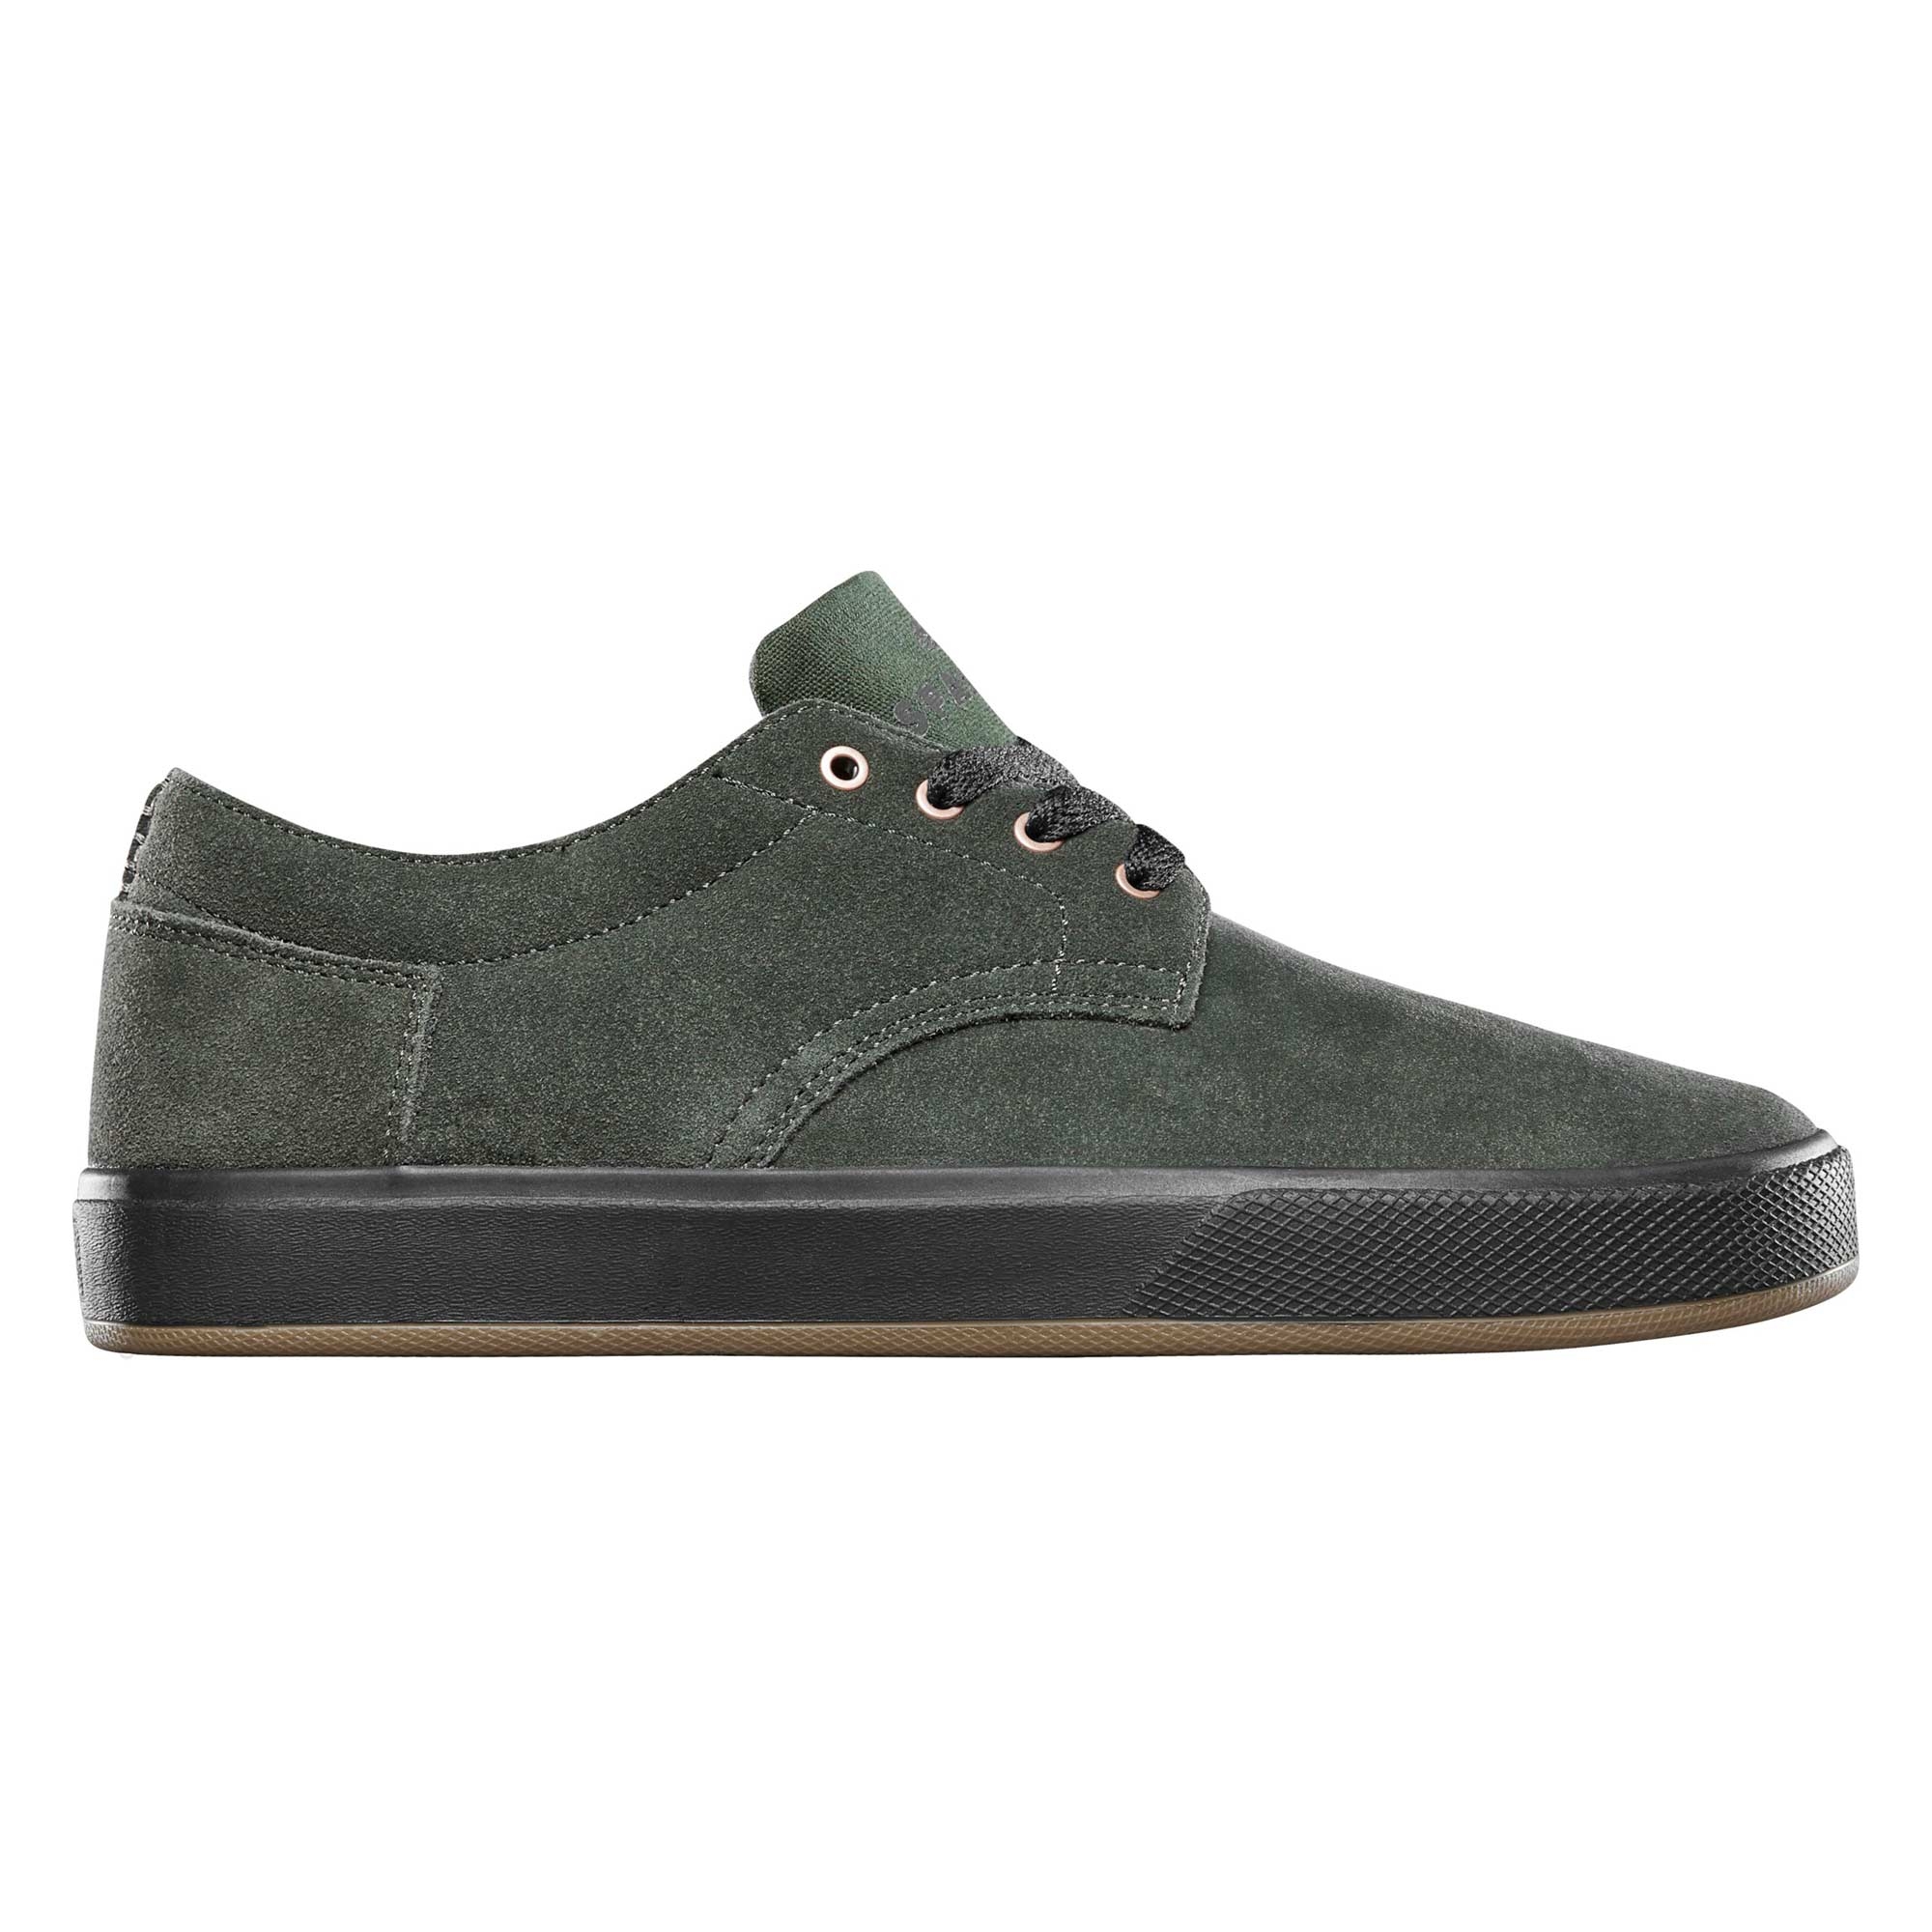 EMERICA Shoe SPANKY G6 gre/bla, green/black